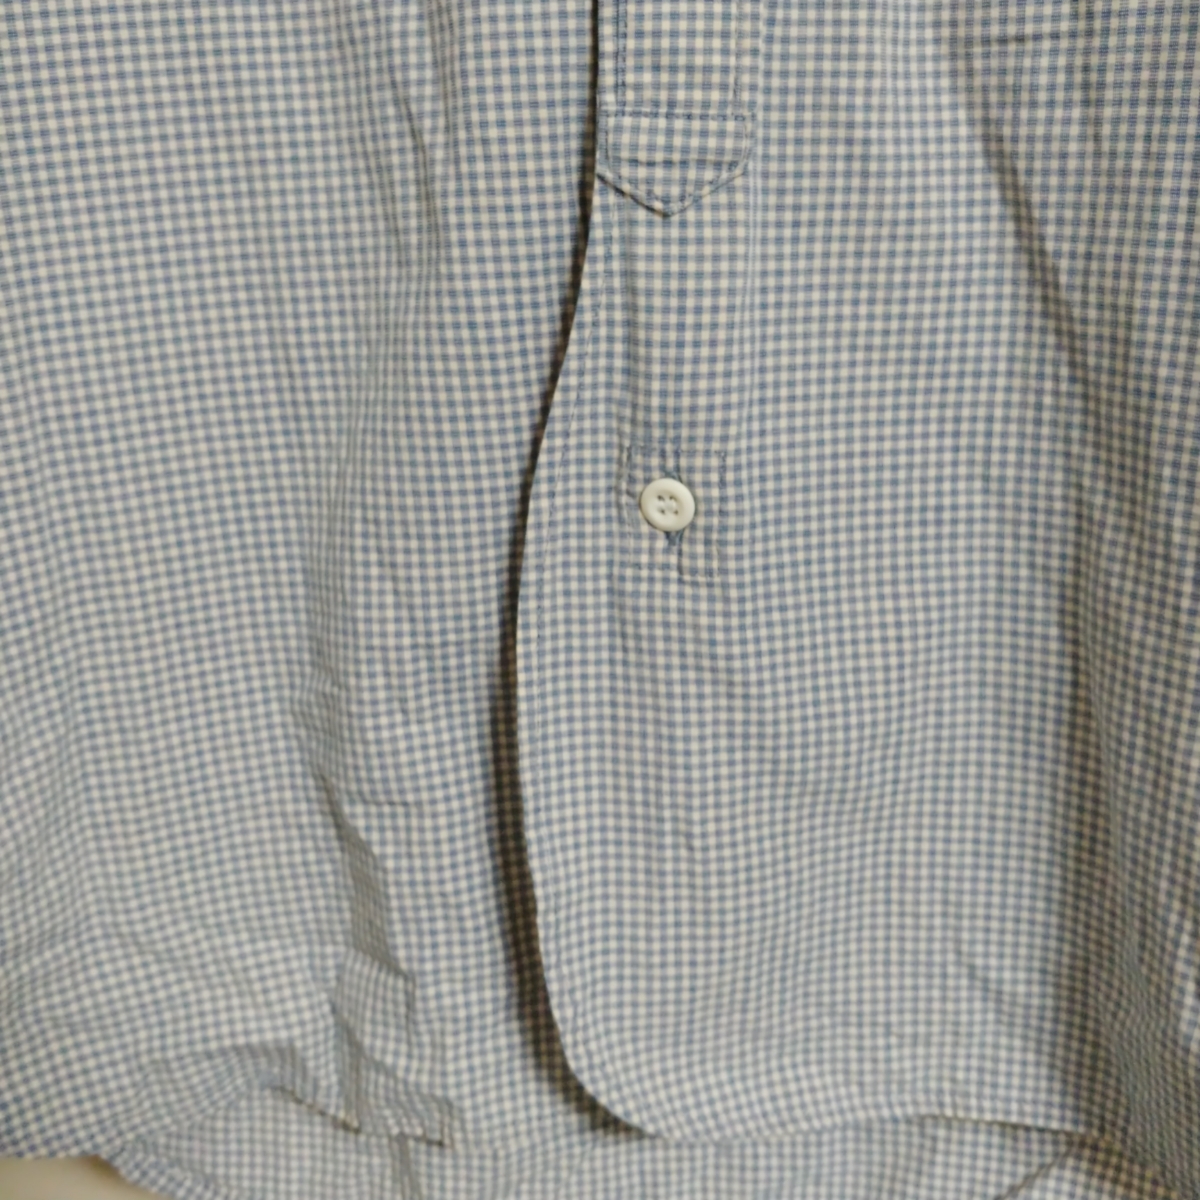 Pledge Pledge проверка рубашка с длинным рукавом size 48 slim